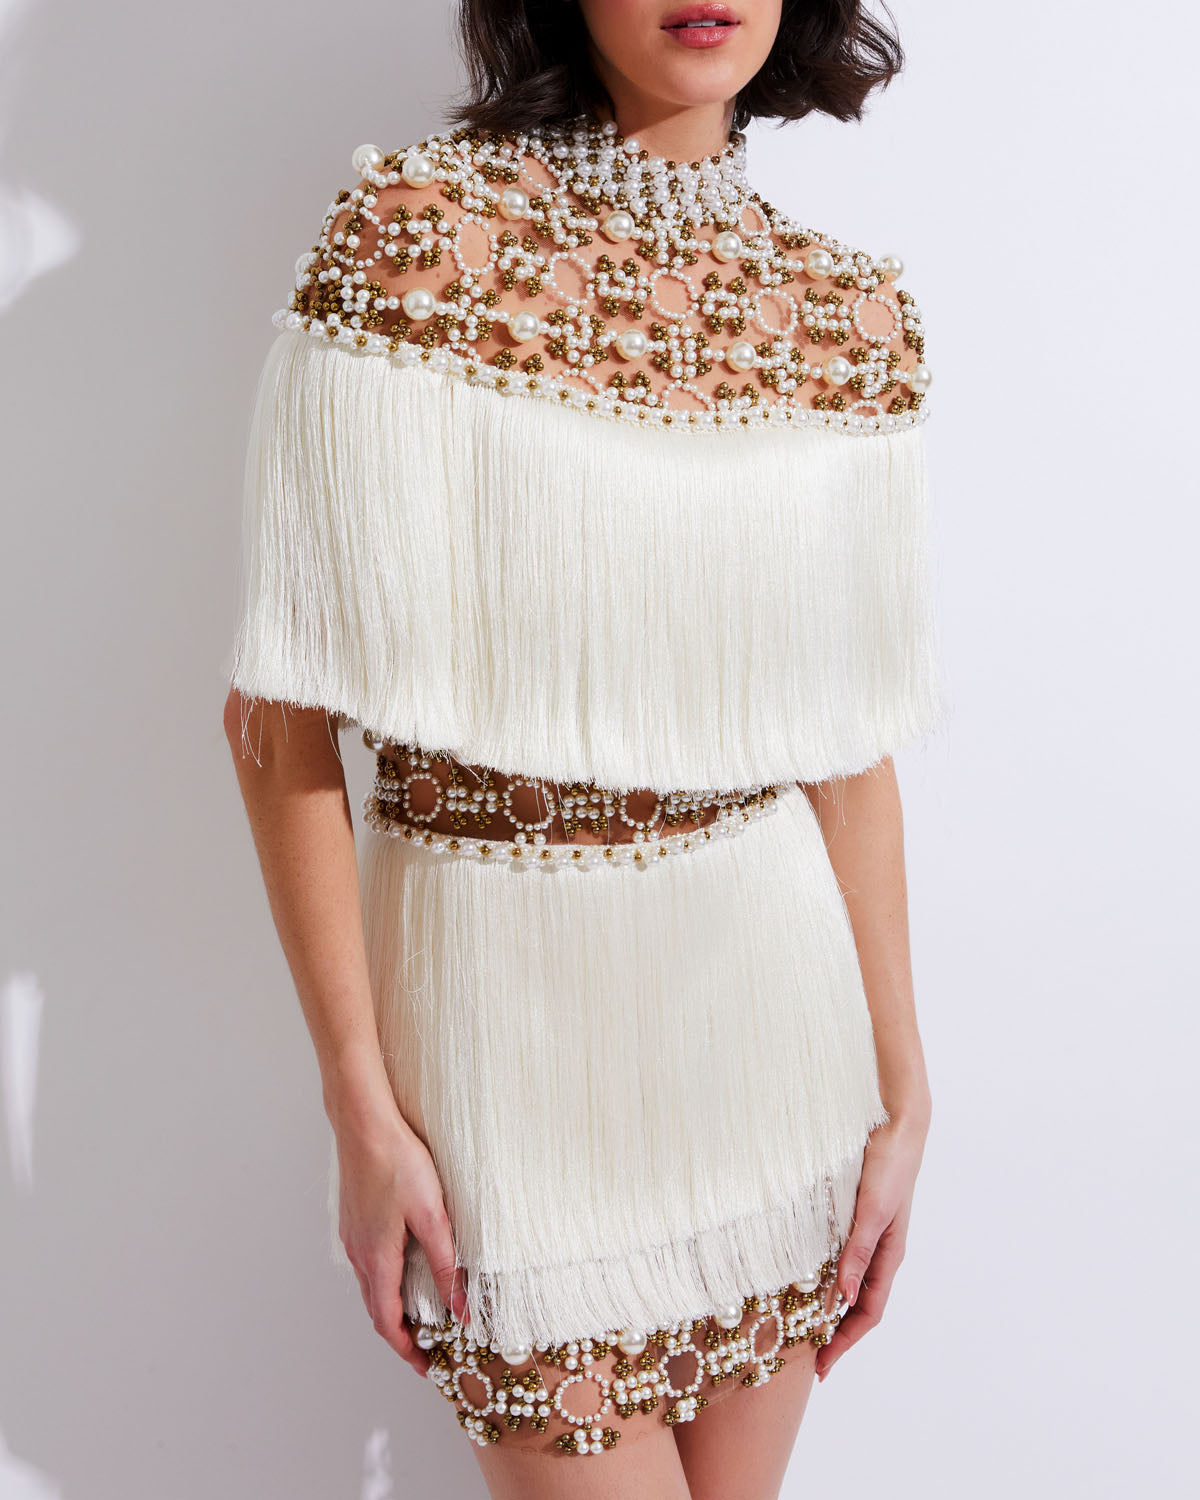 Patbo Women's Bead & Fringe Cut-Out Dress - White - Size 2